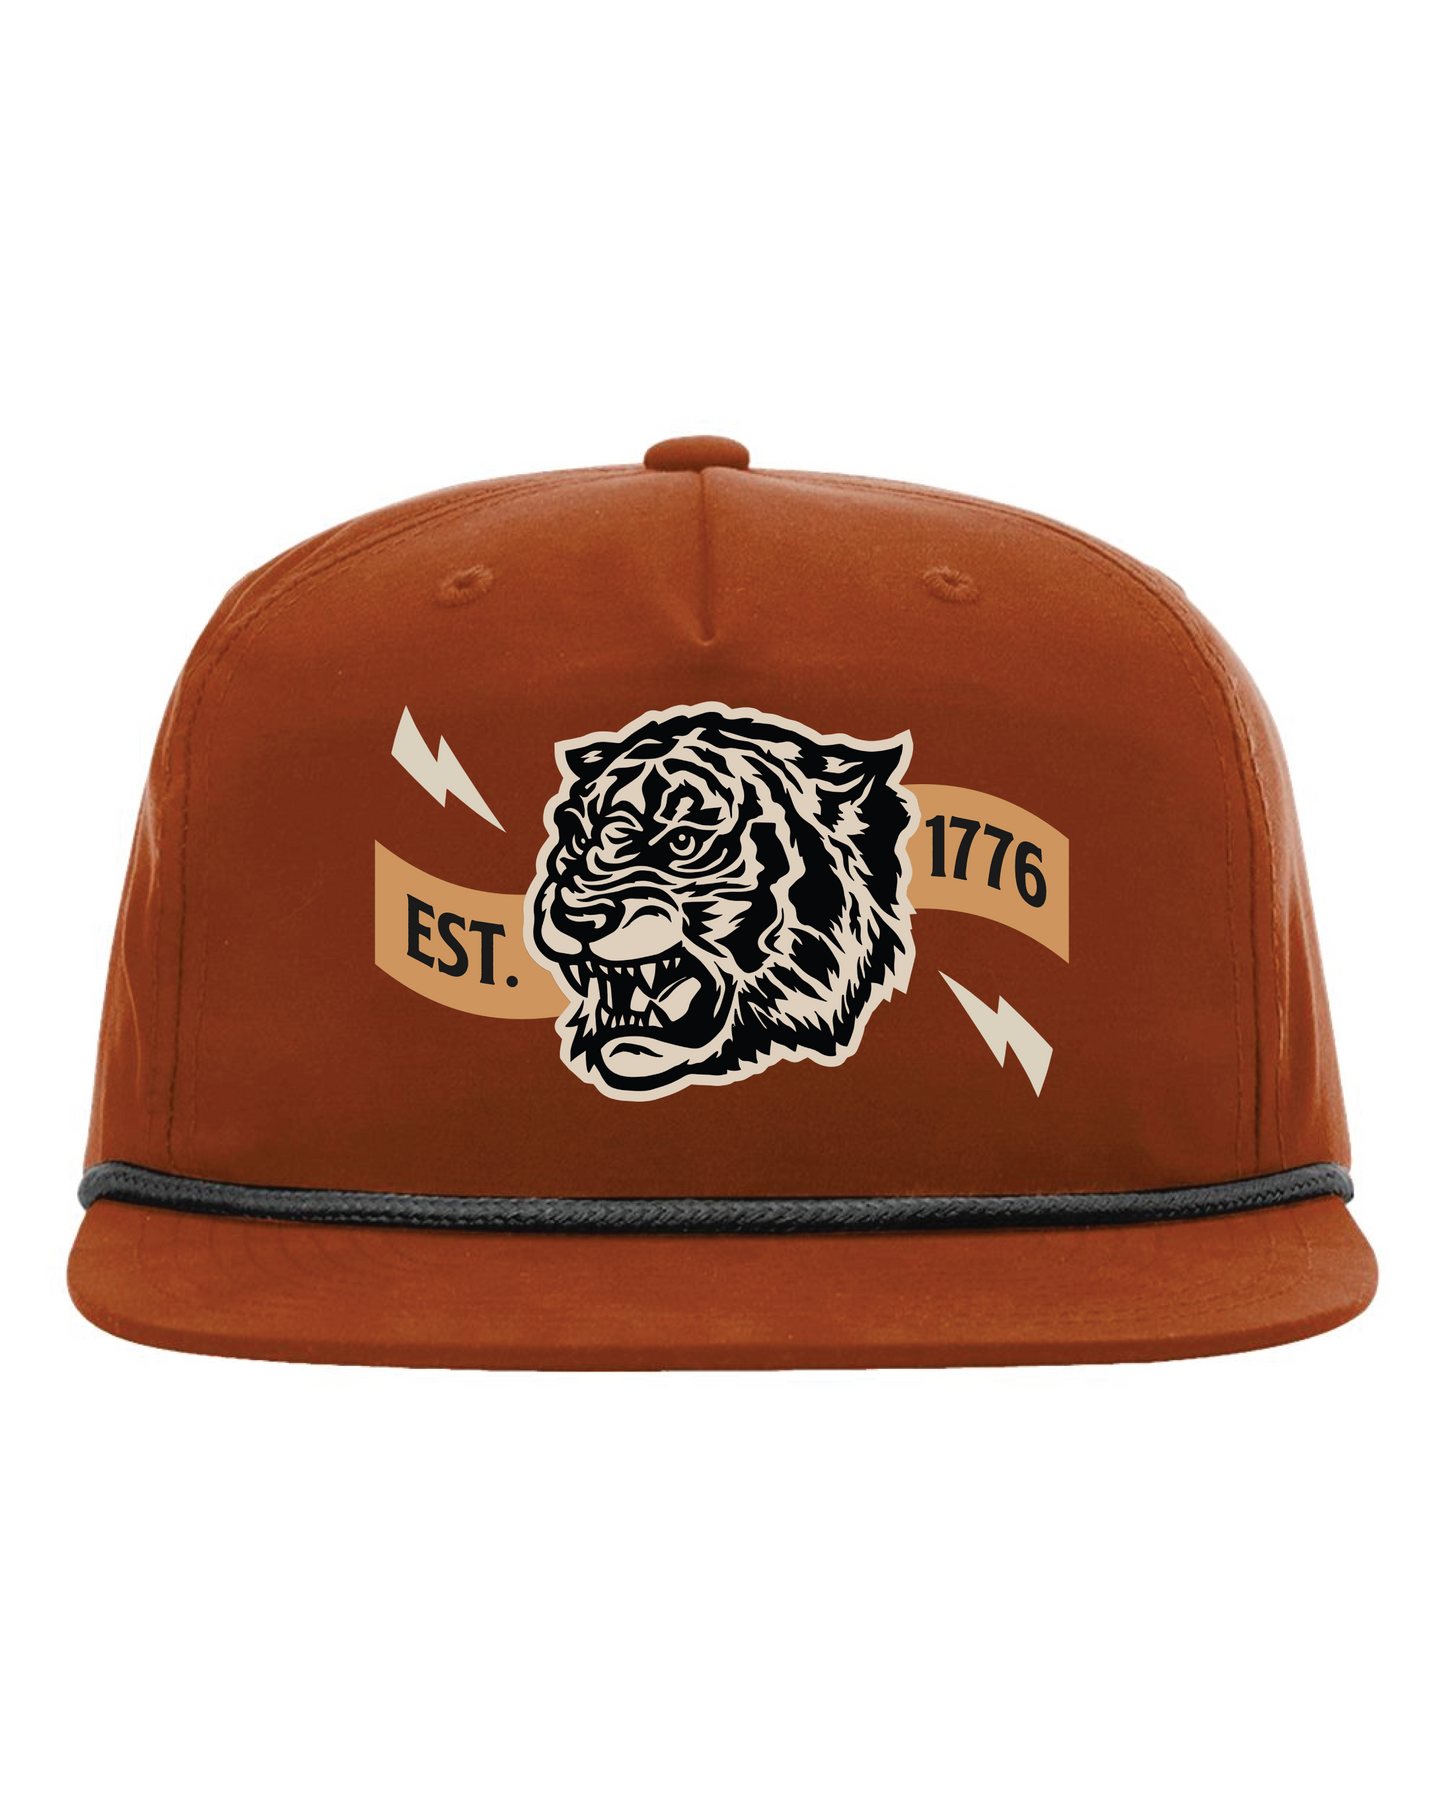 1776 Tiger - Rope Hat